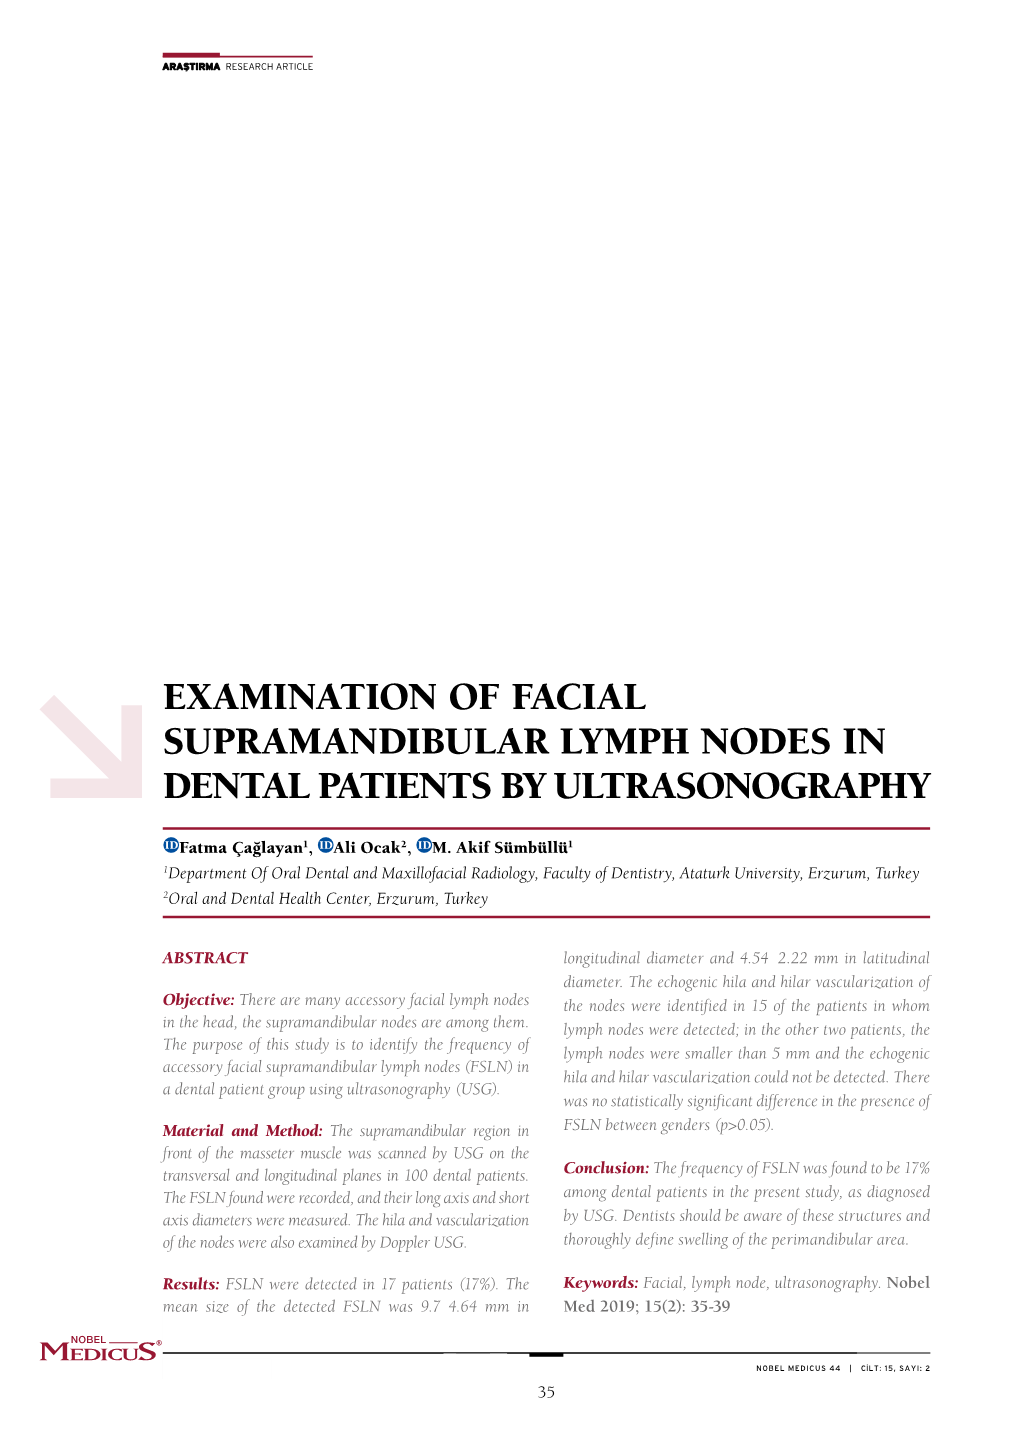 Examination of Facial Supramandibular Lymph Nodes in Dental Patients by Ultrasonography